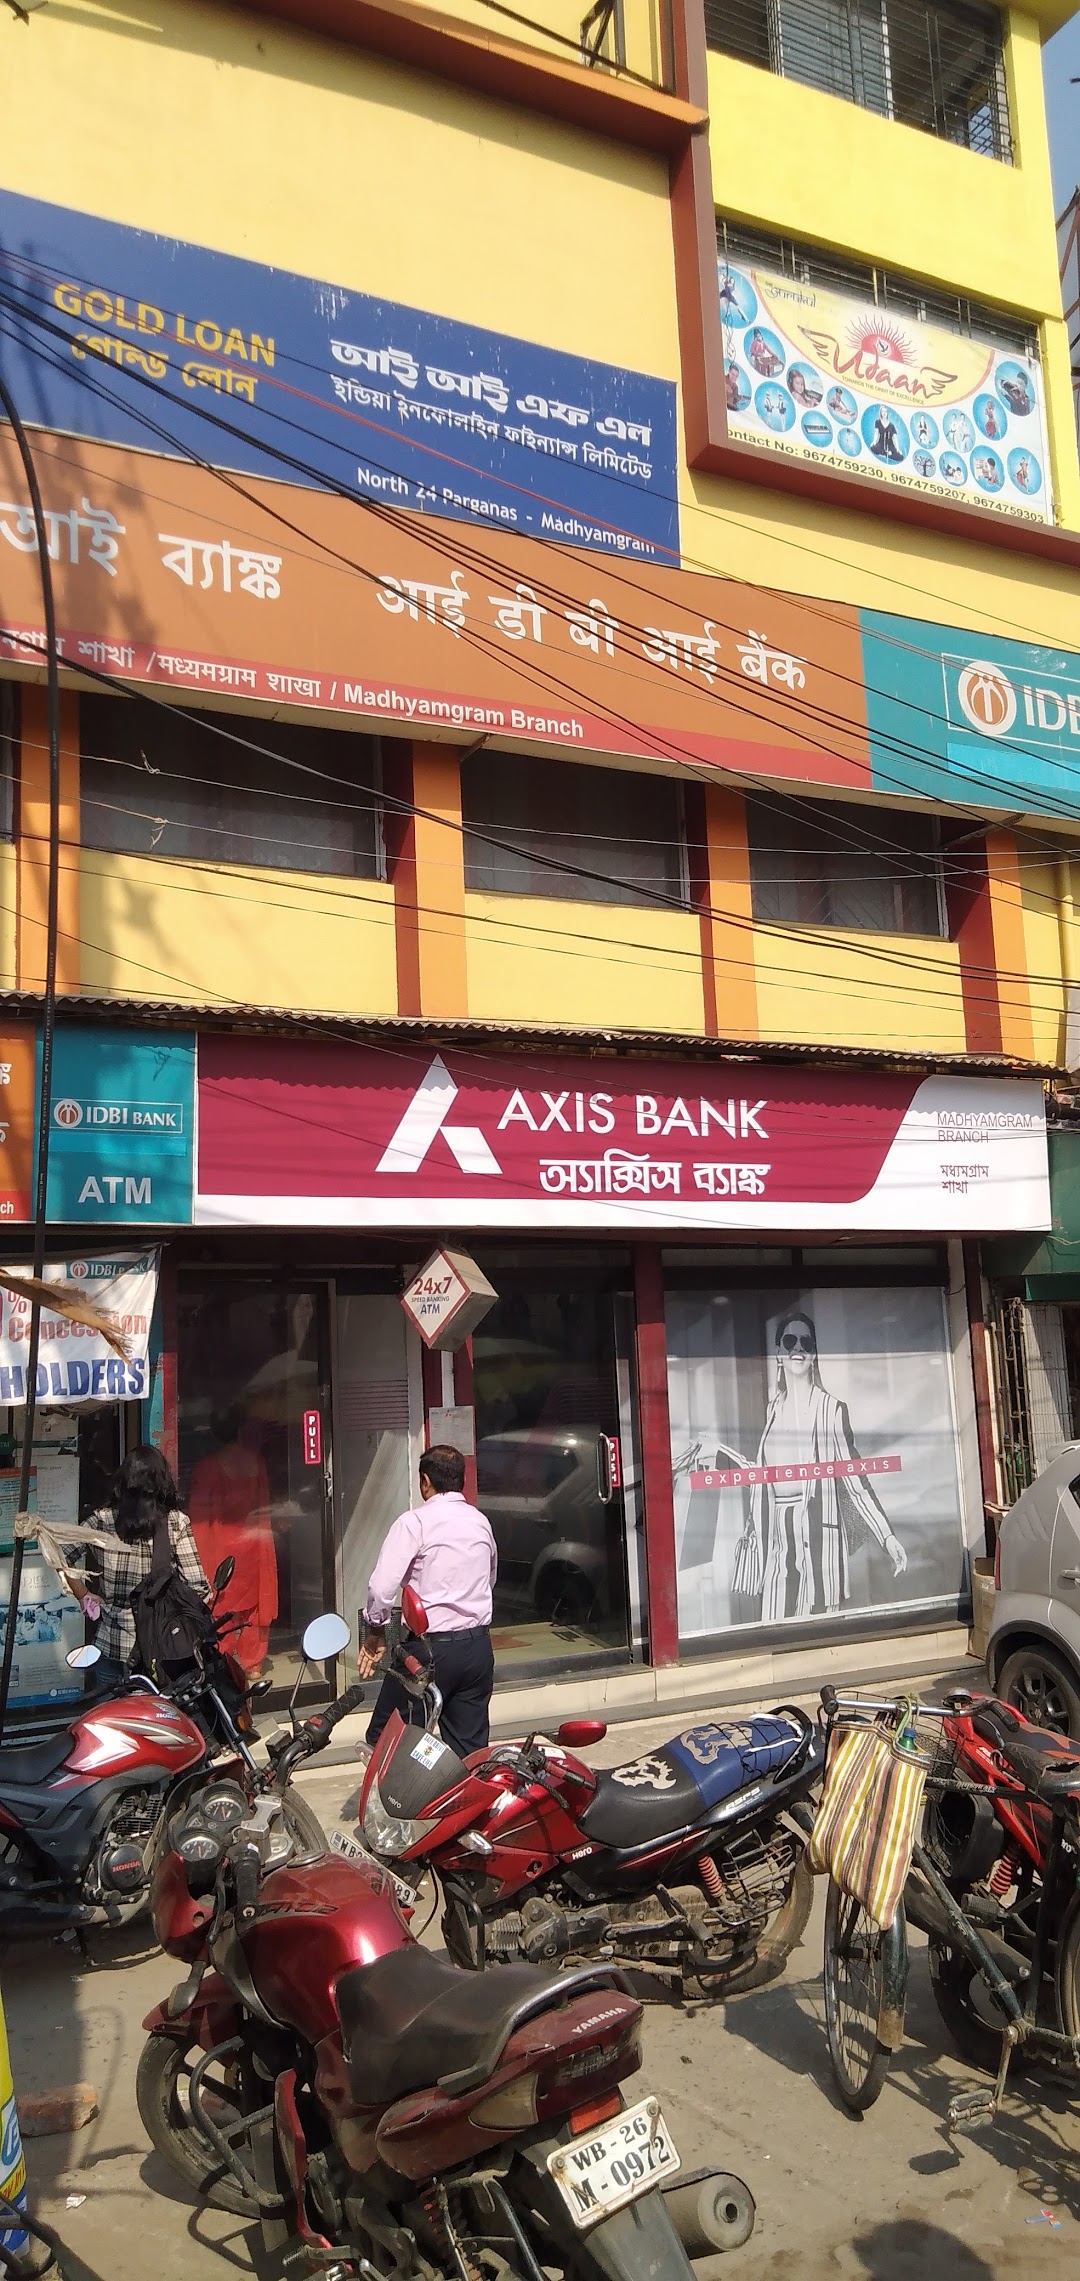 IDBI Bank - Madhyamgram Branch